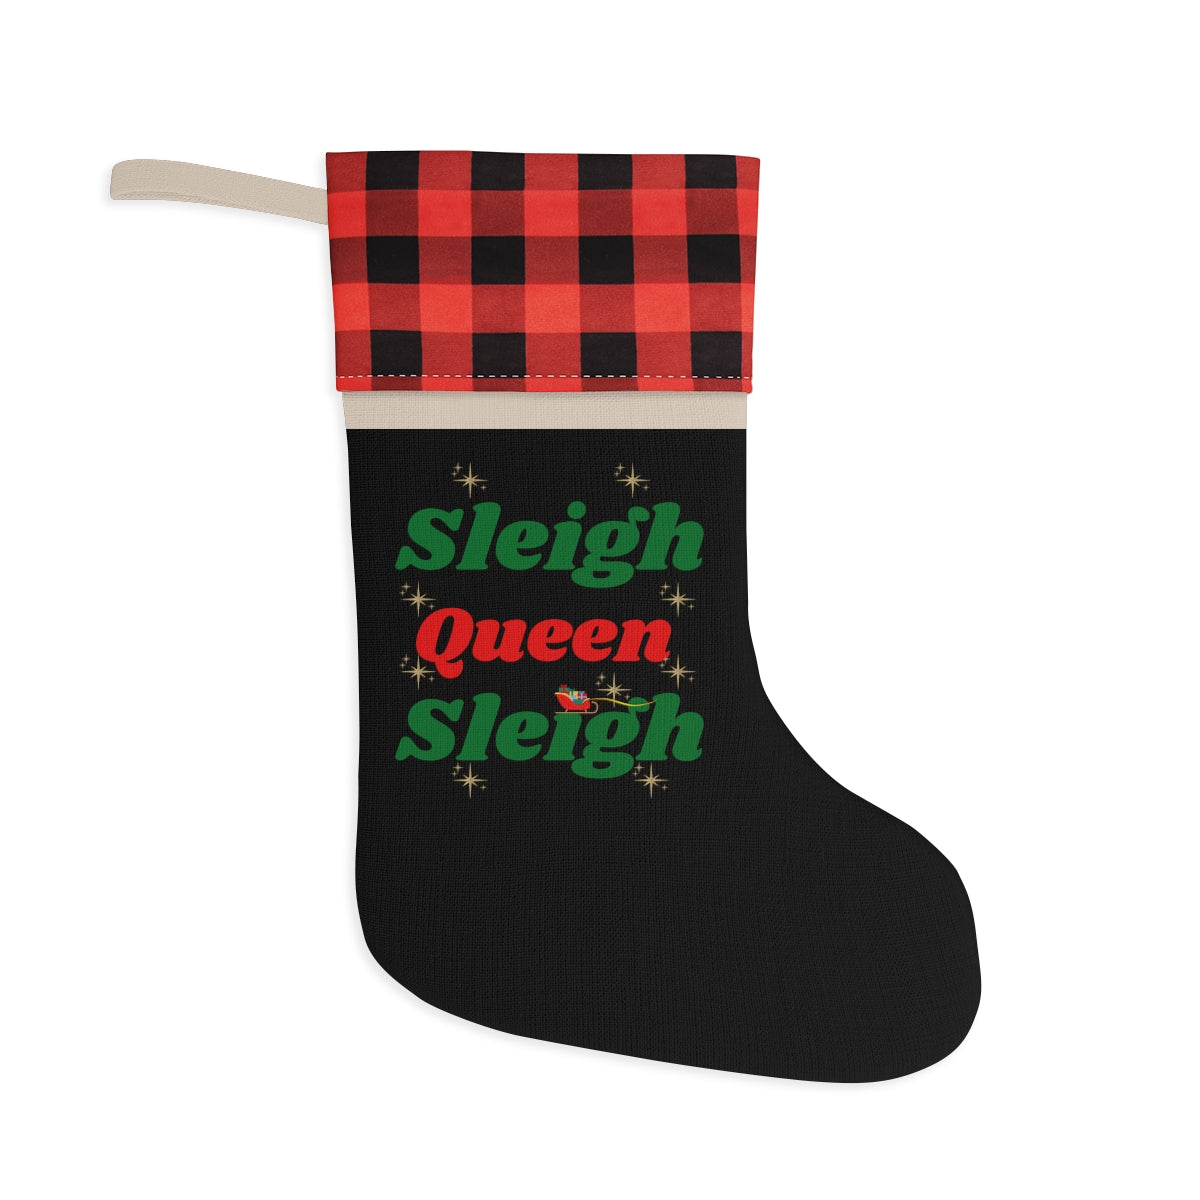 Sleigh Queen Sleigh (Black) Christmas Stocking